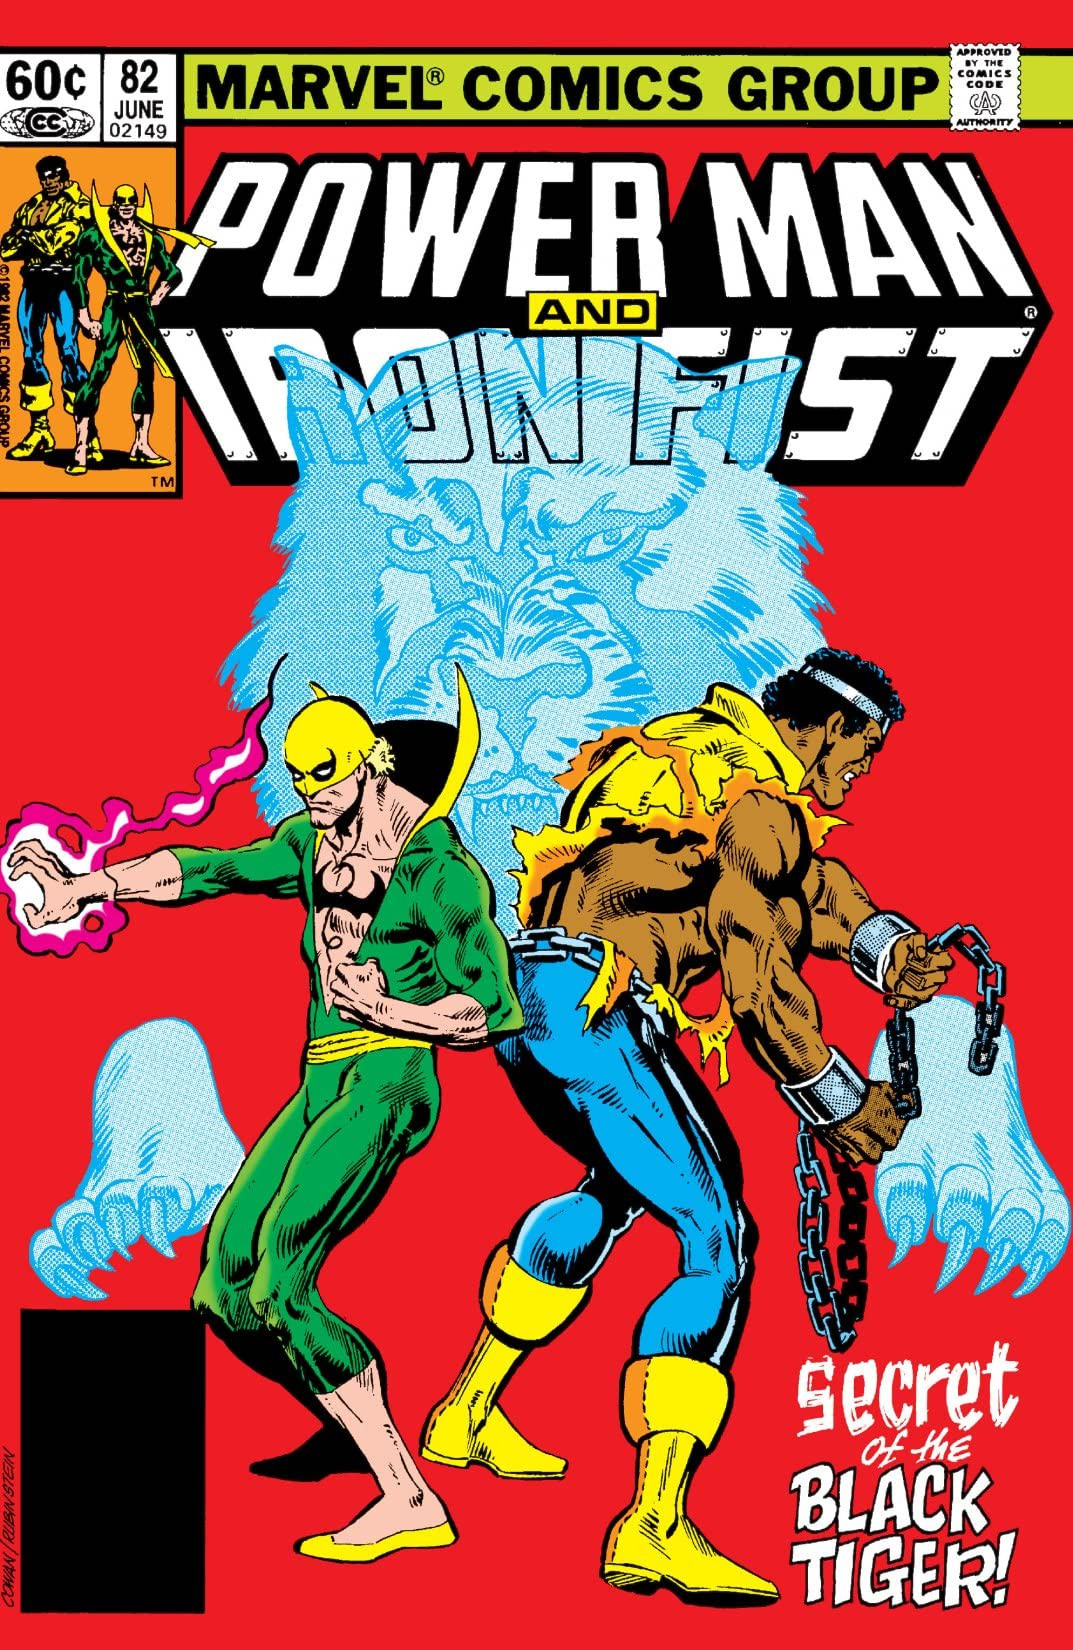 Iron Fist Vol 1 15, Marvel Database